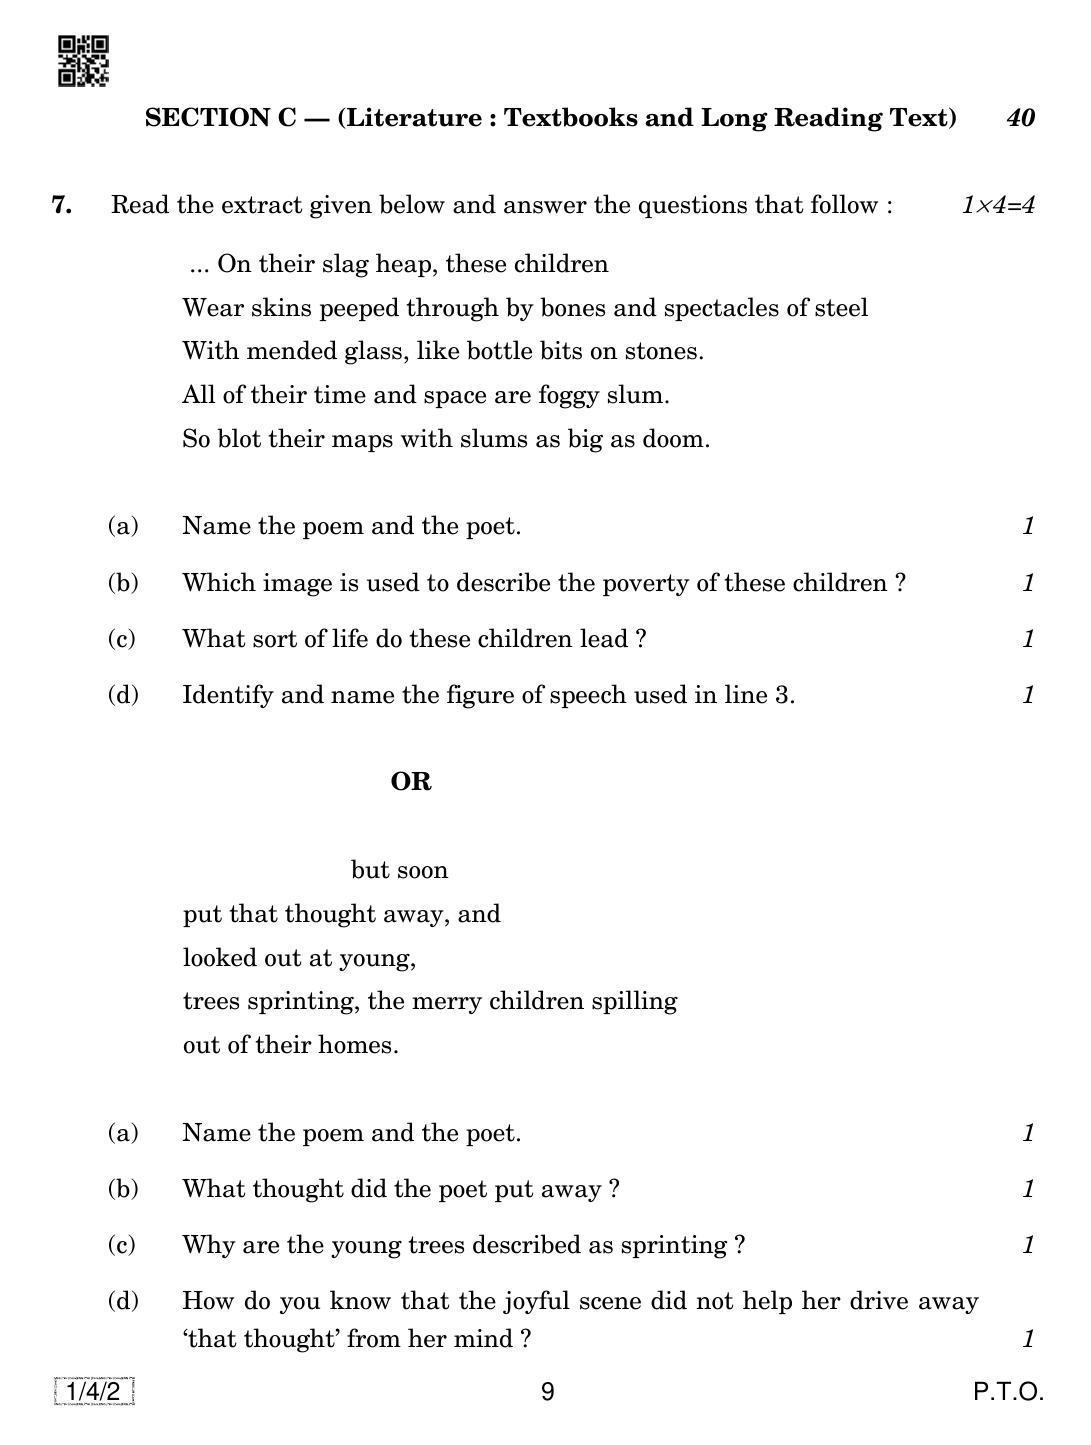 CBSE Class 12 1-4-2 English Core 2019 Question Paper - Page 9